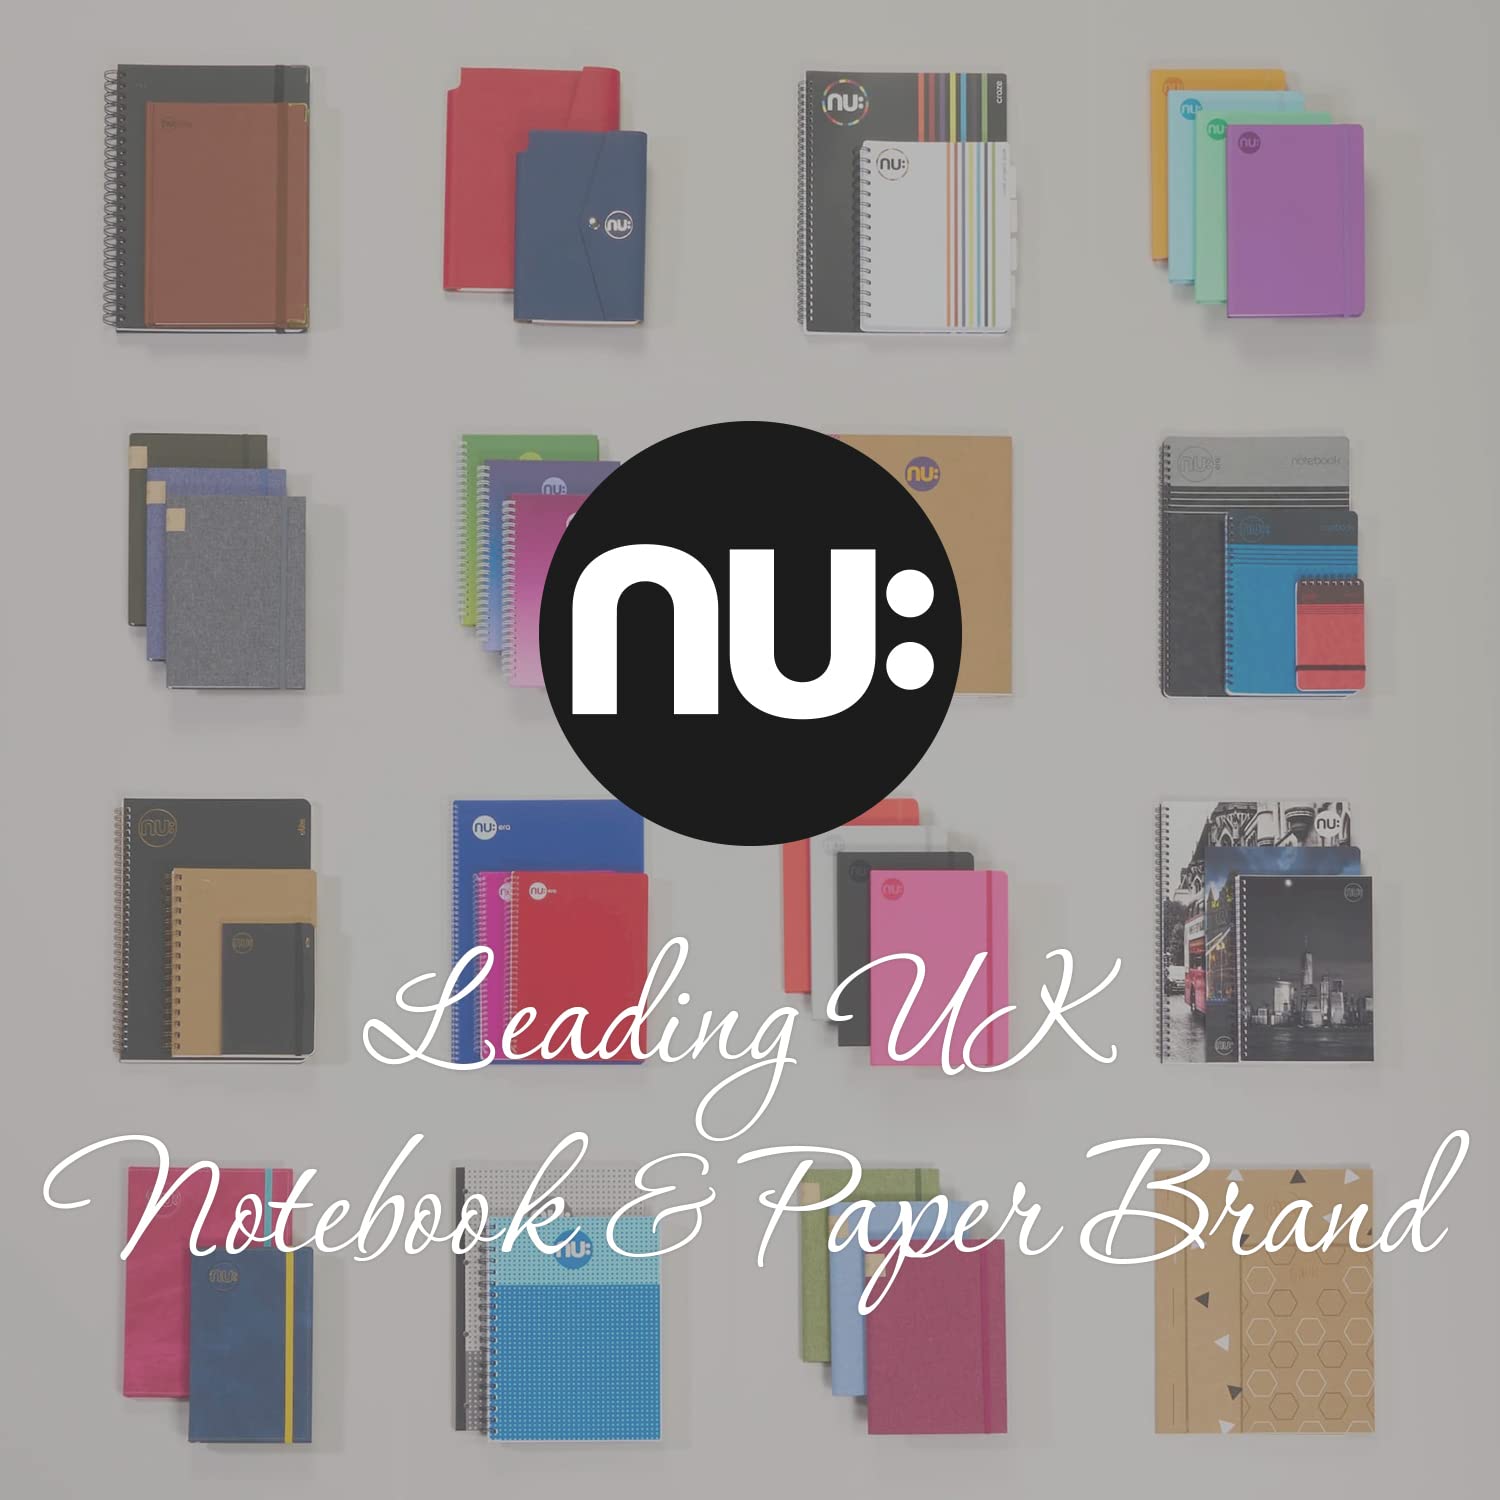 NU: Notebooks - Cloud Pastels Range - A5 Blue Notebook - Wirebound Notebook - 110 Pages (NU004111-FSC)